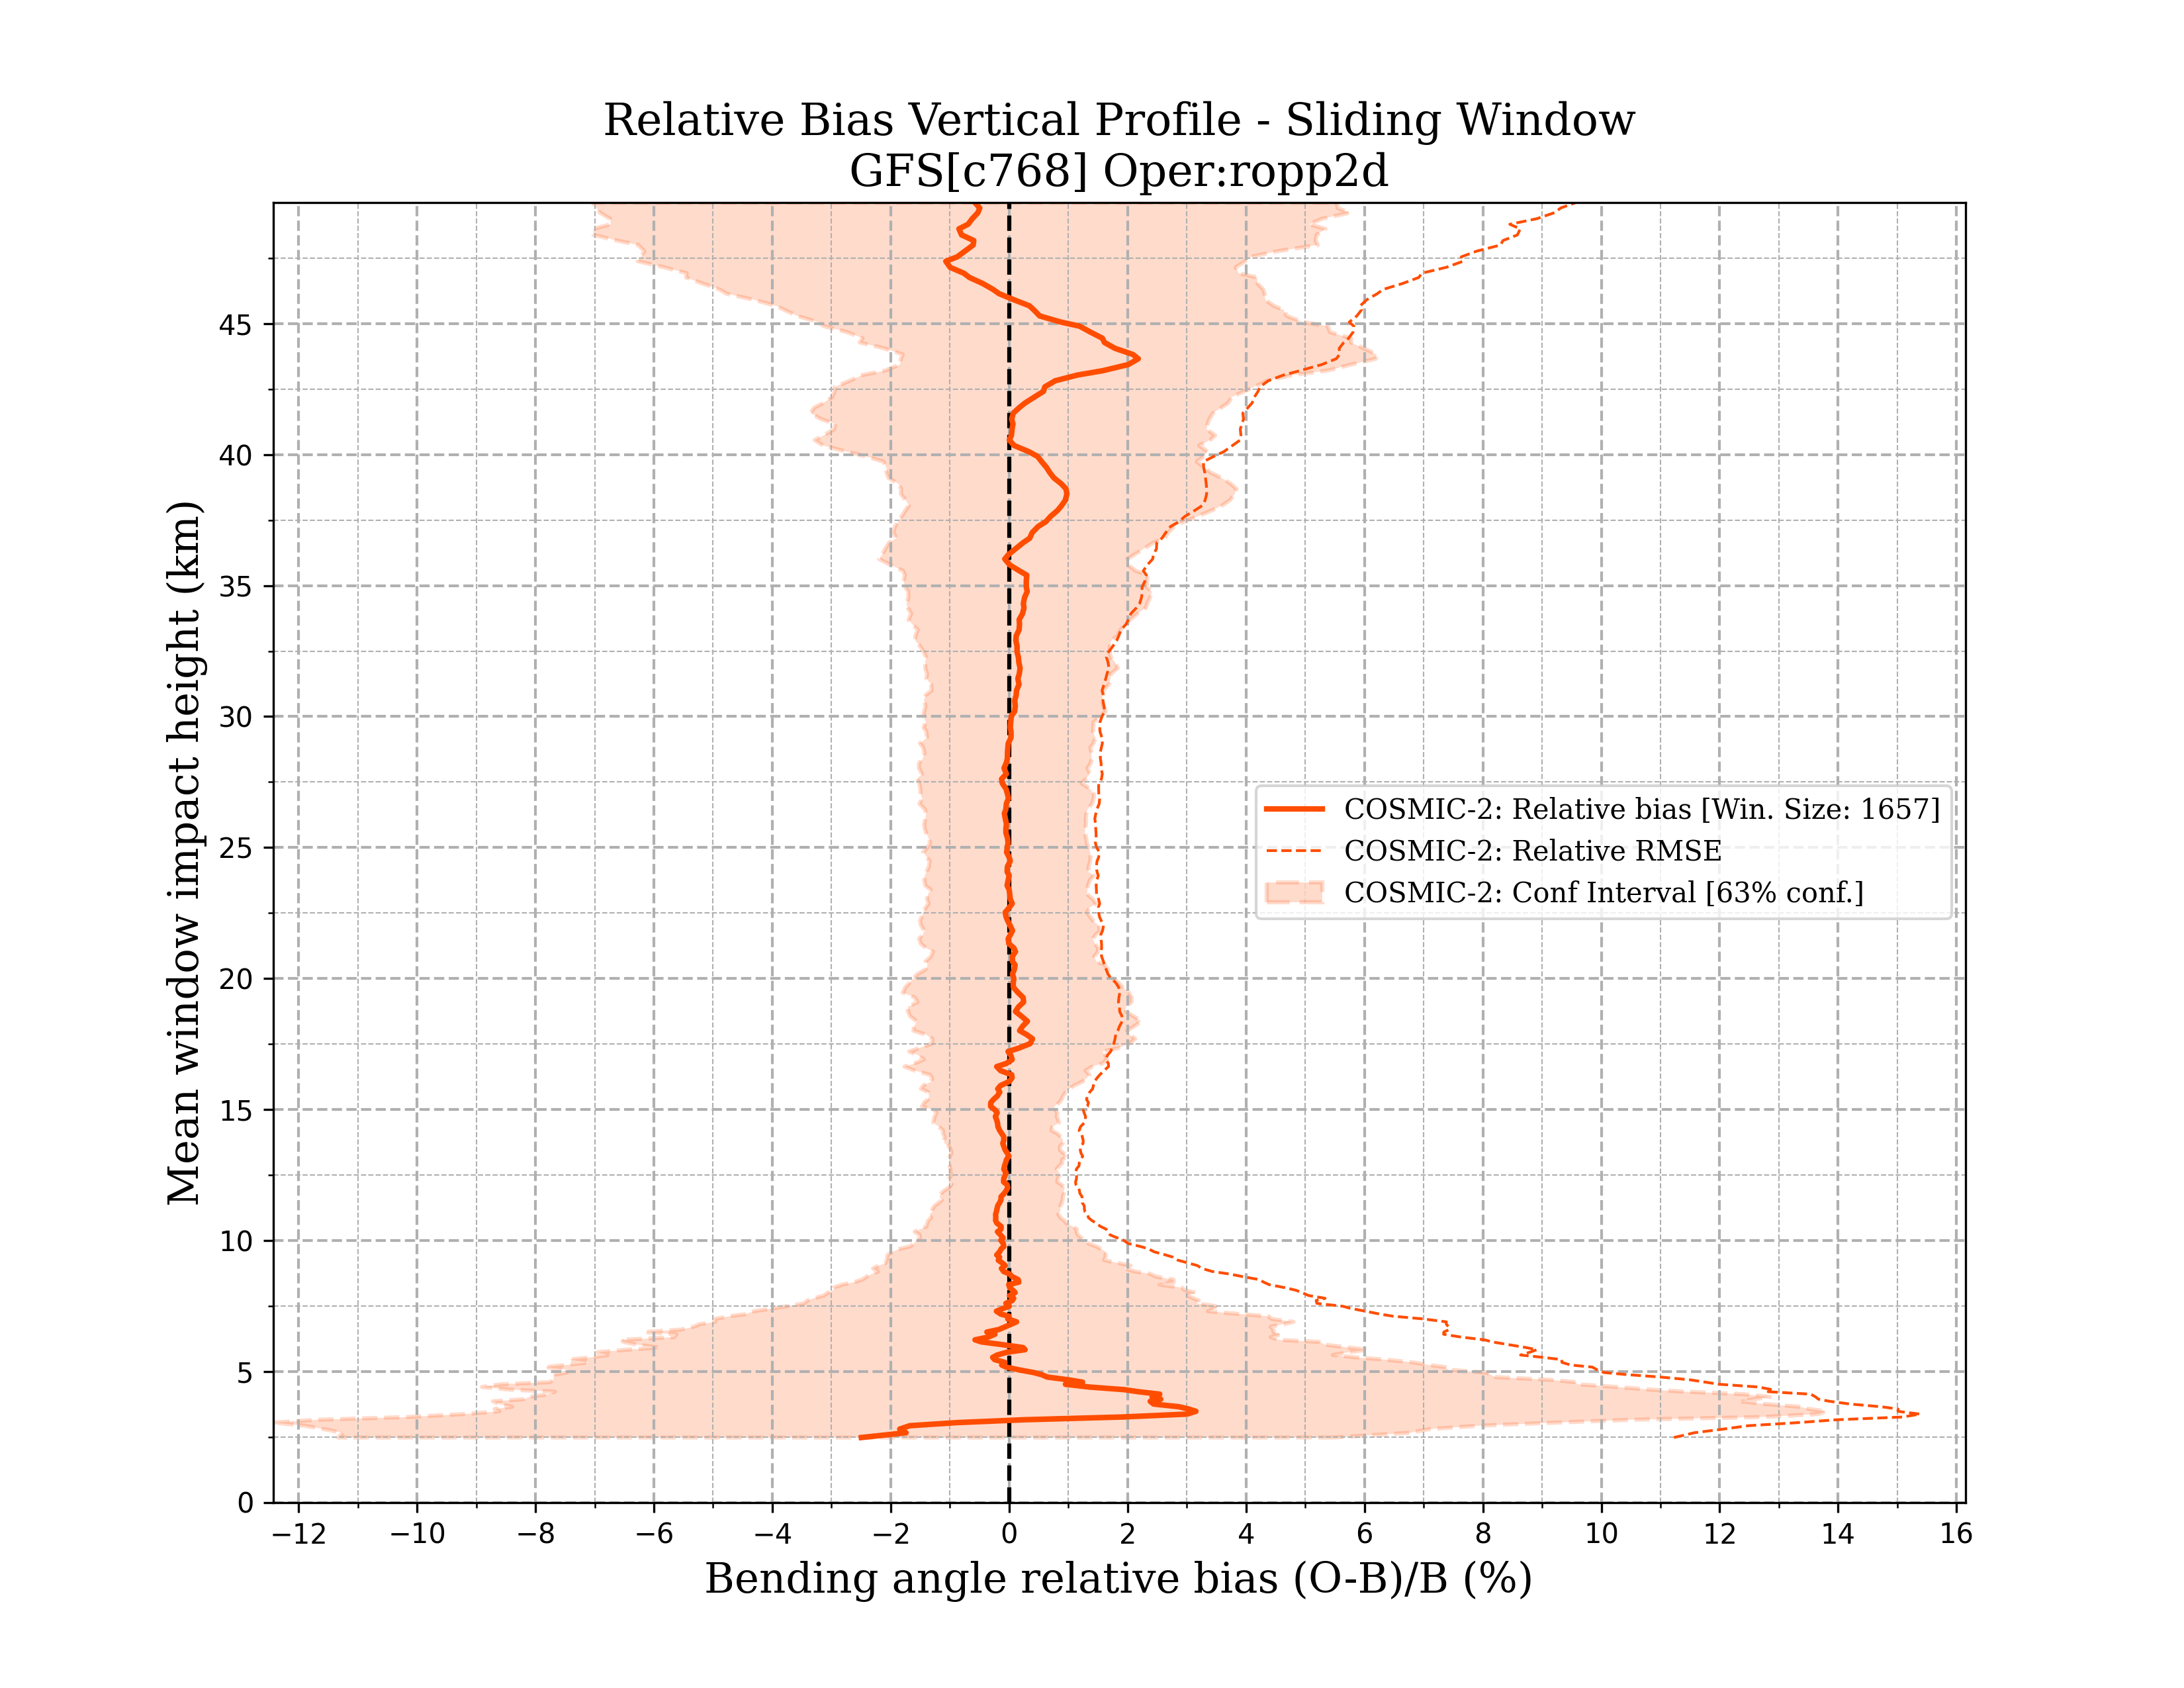 cosmic-2 ropp2d vertical_profile_sw